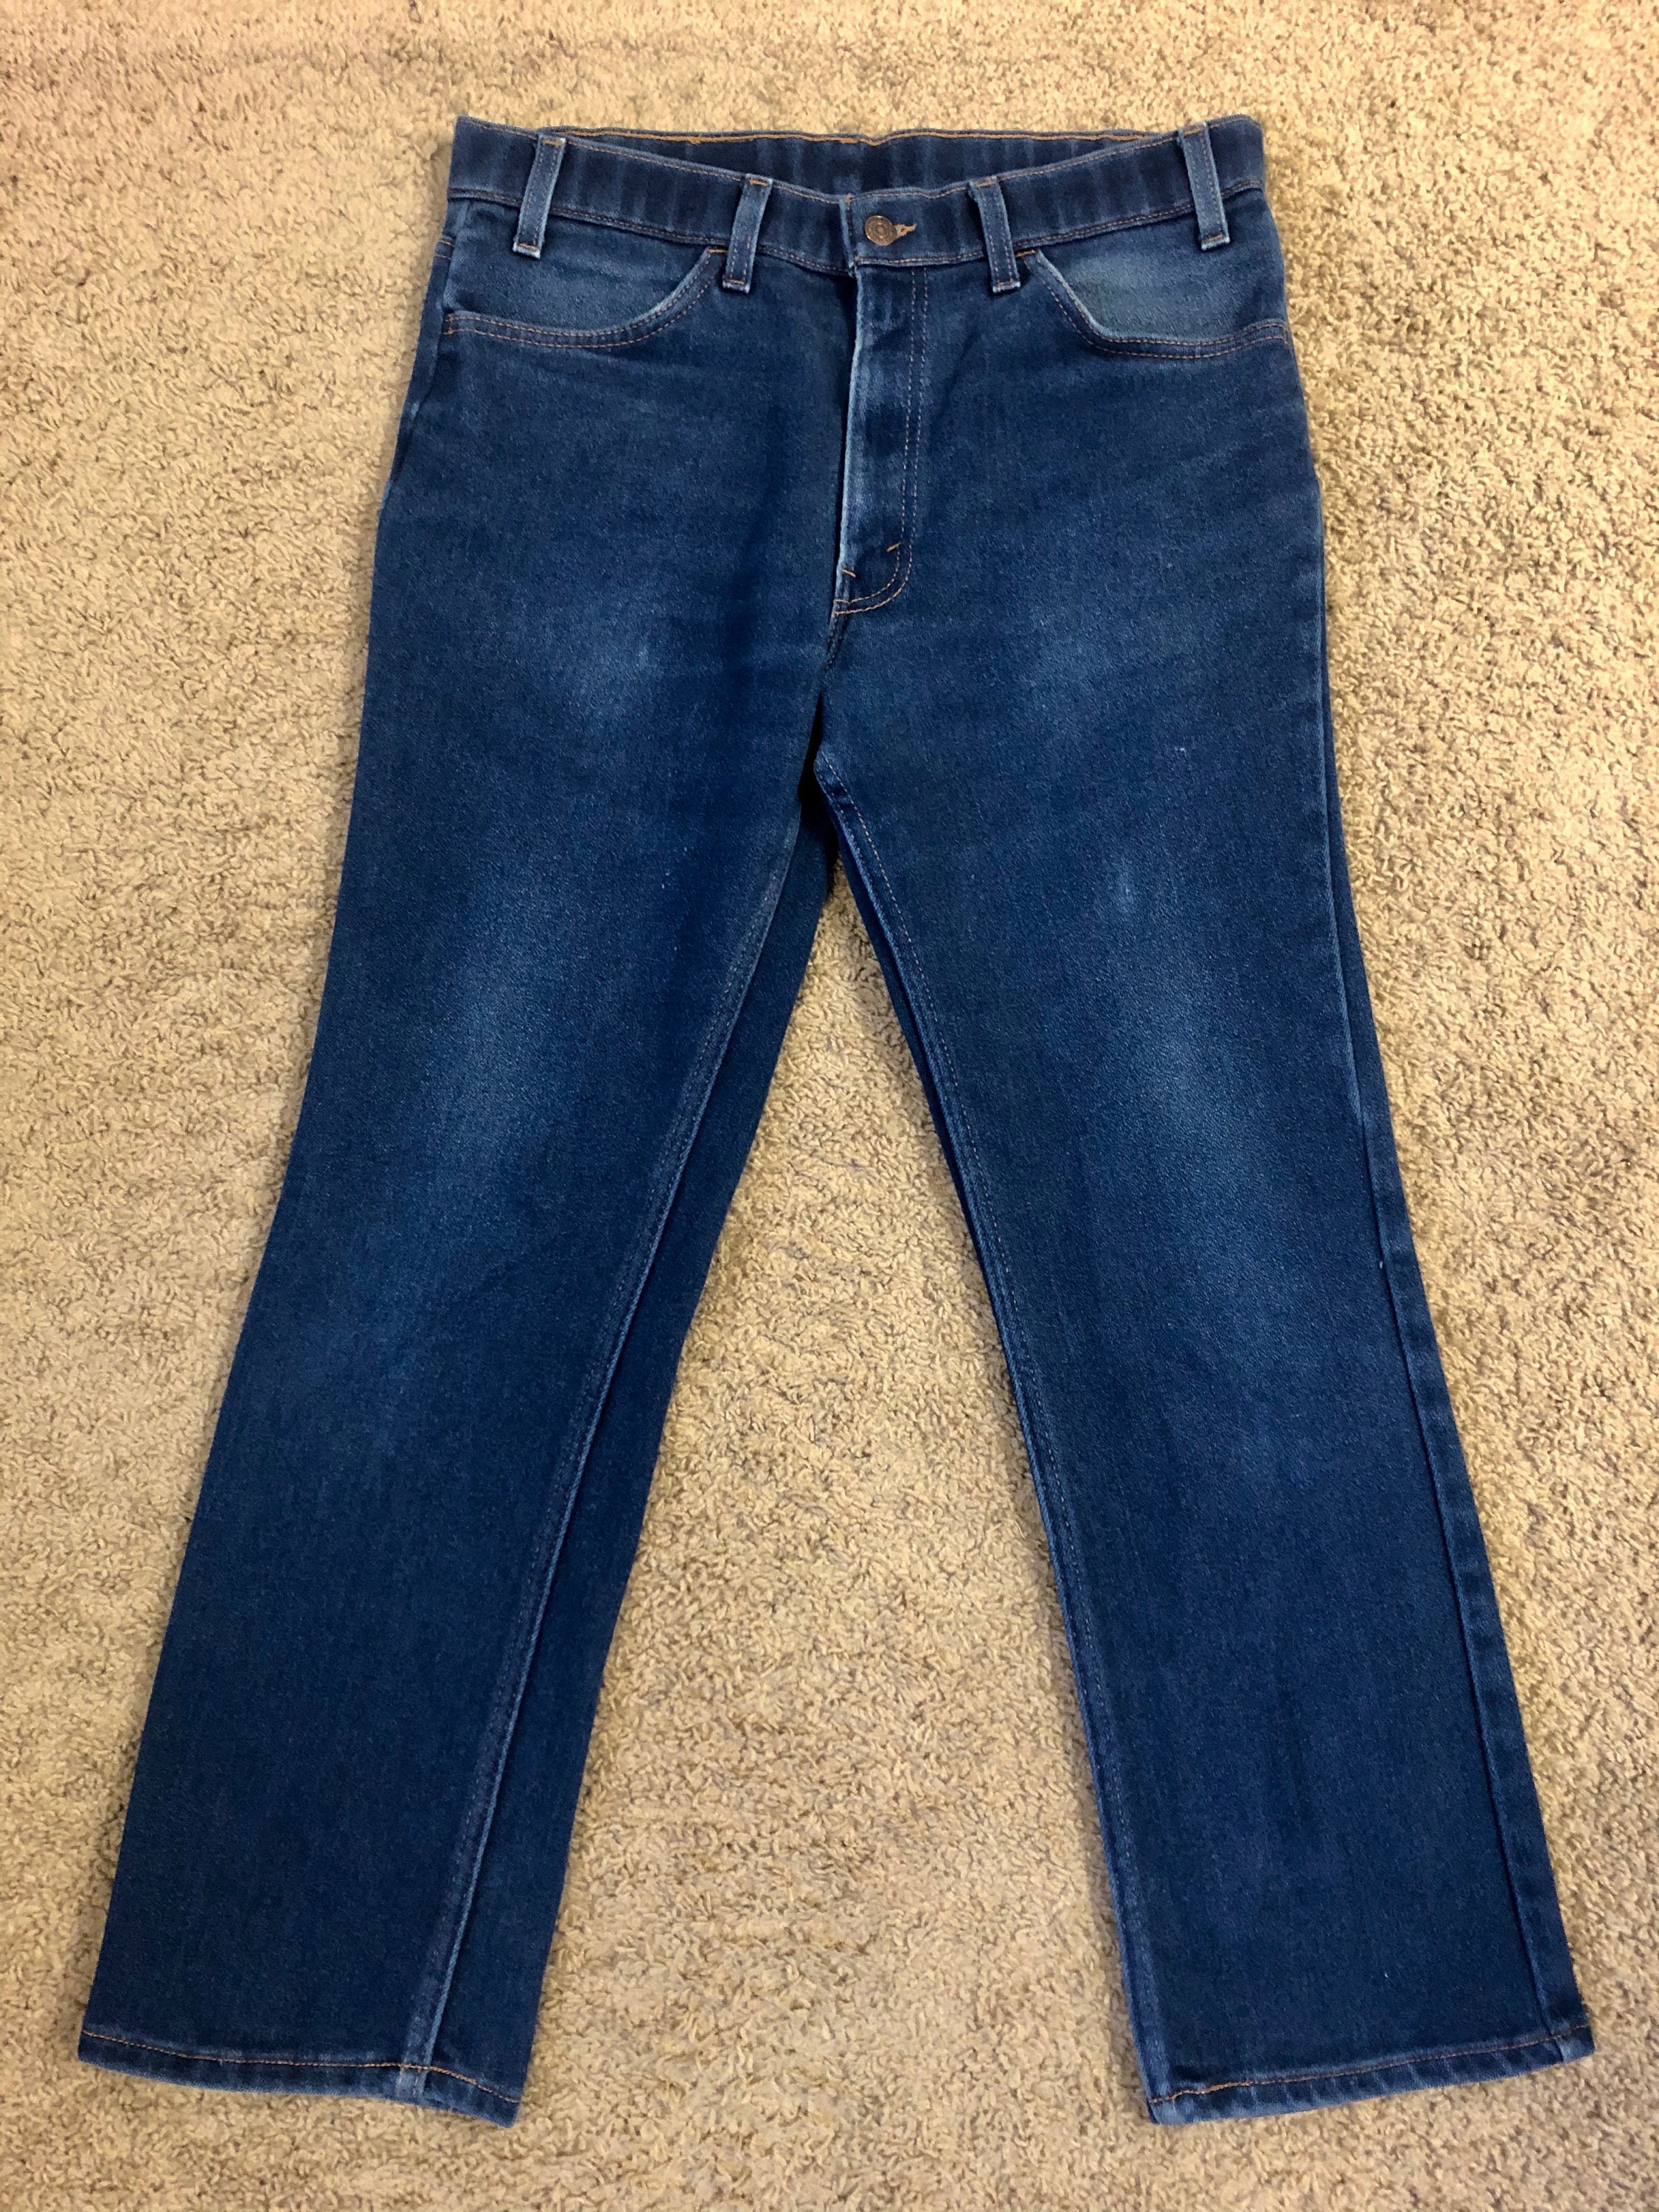 Vintage Men's 70's Levi's Jeans Dark Wash Short | Etsy